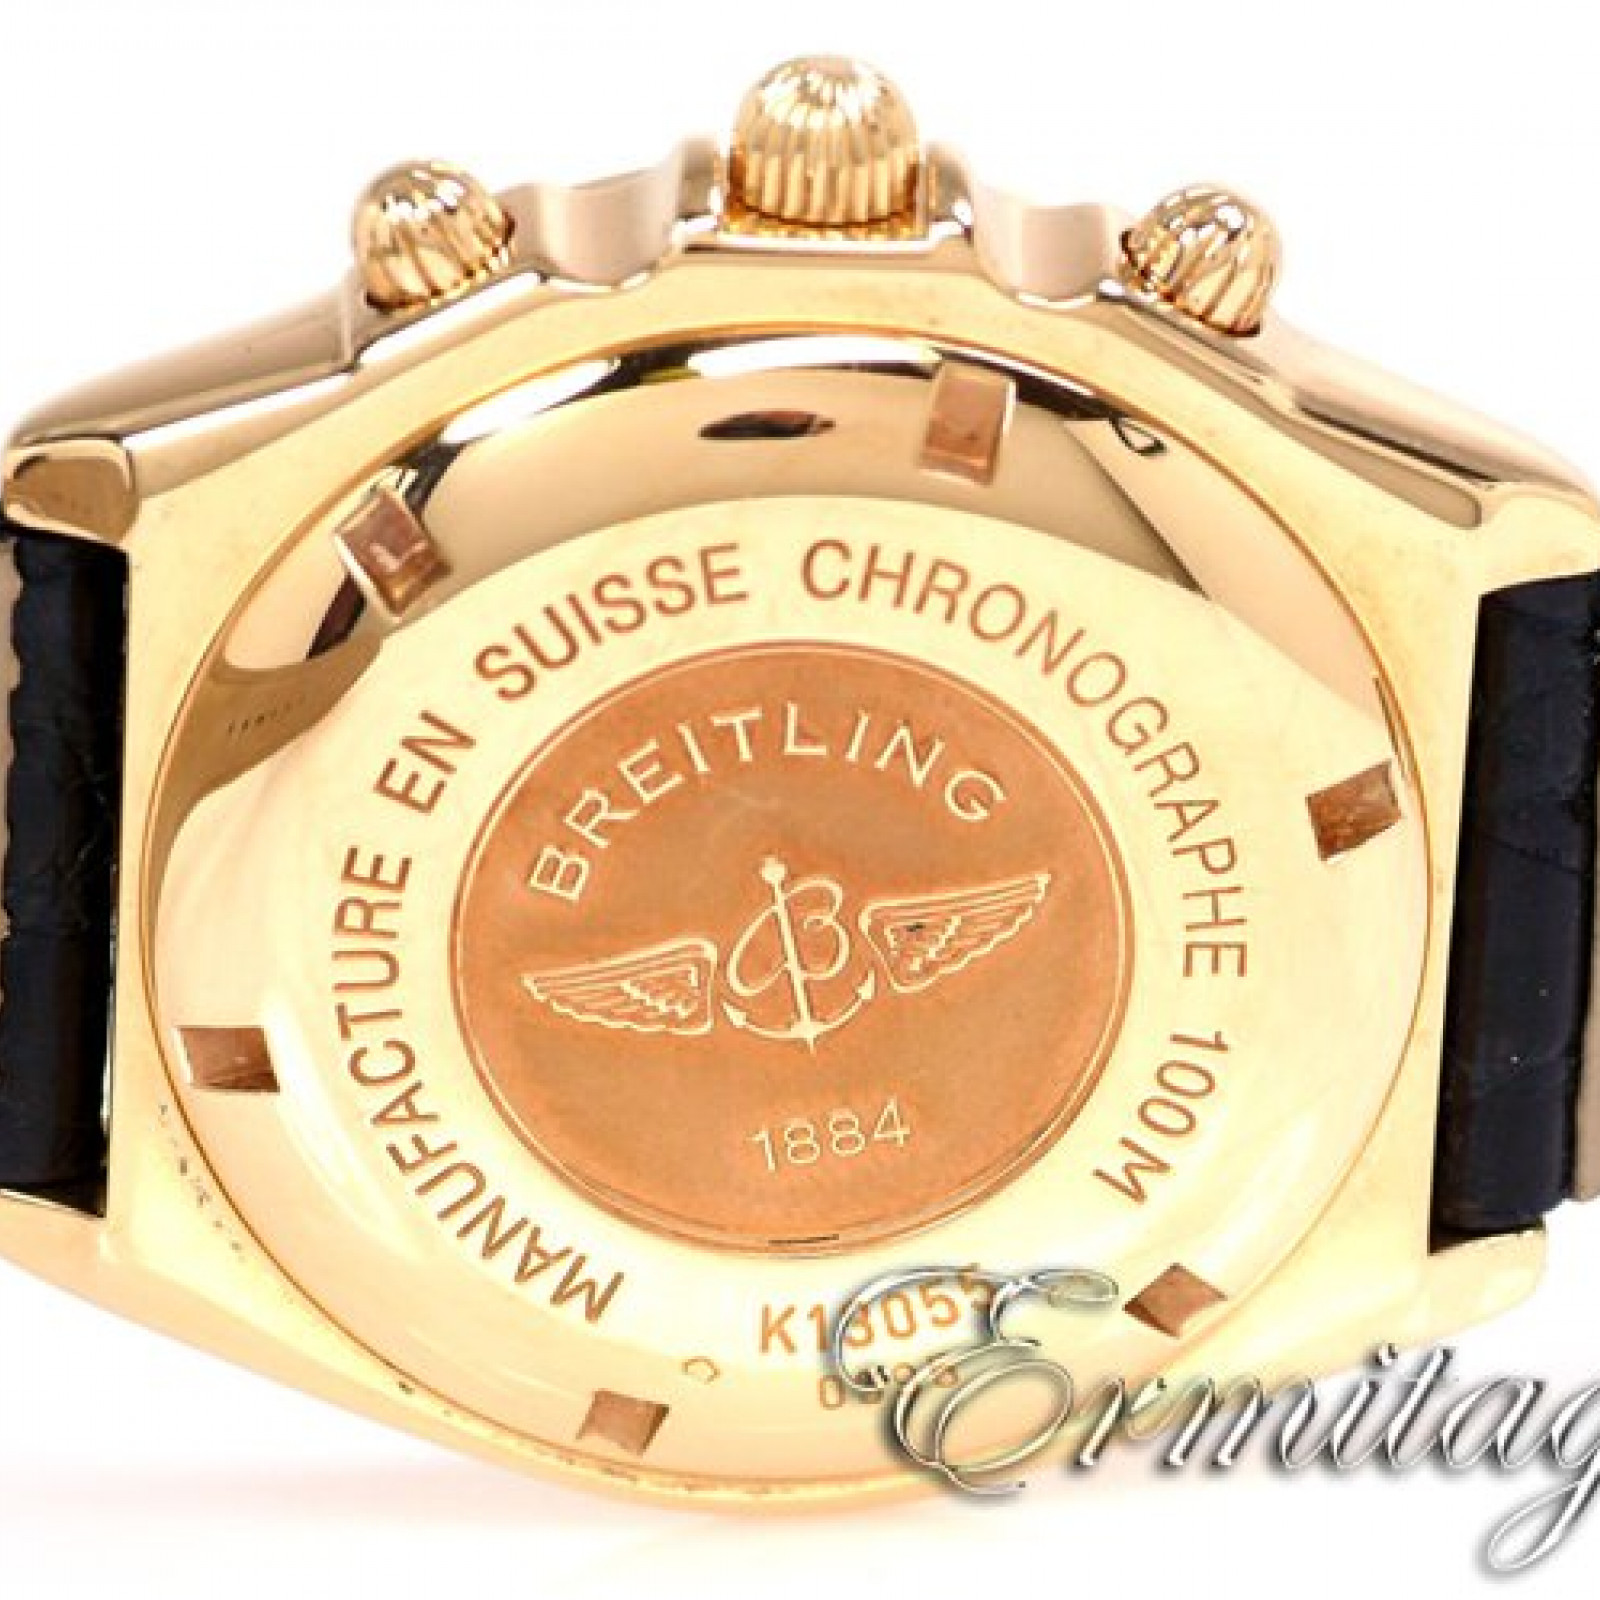 Breitling Windrider Crosswind Chronograph K13055 Gold